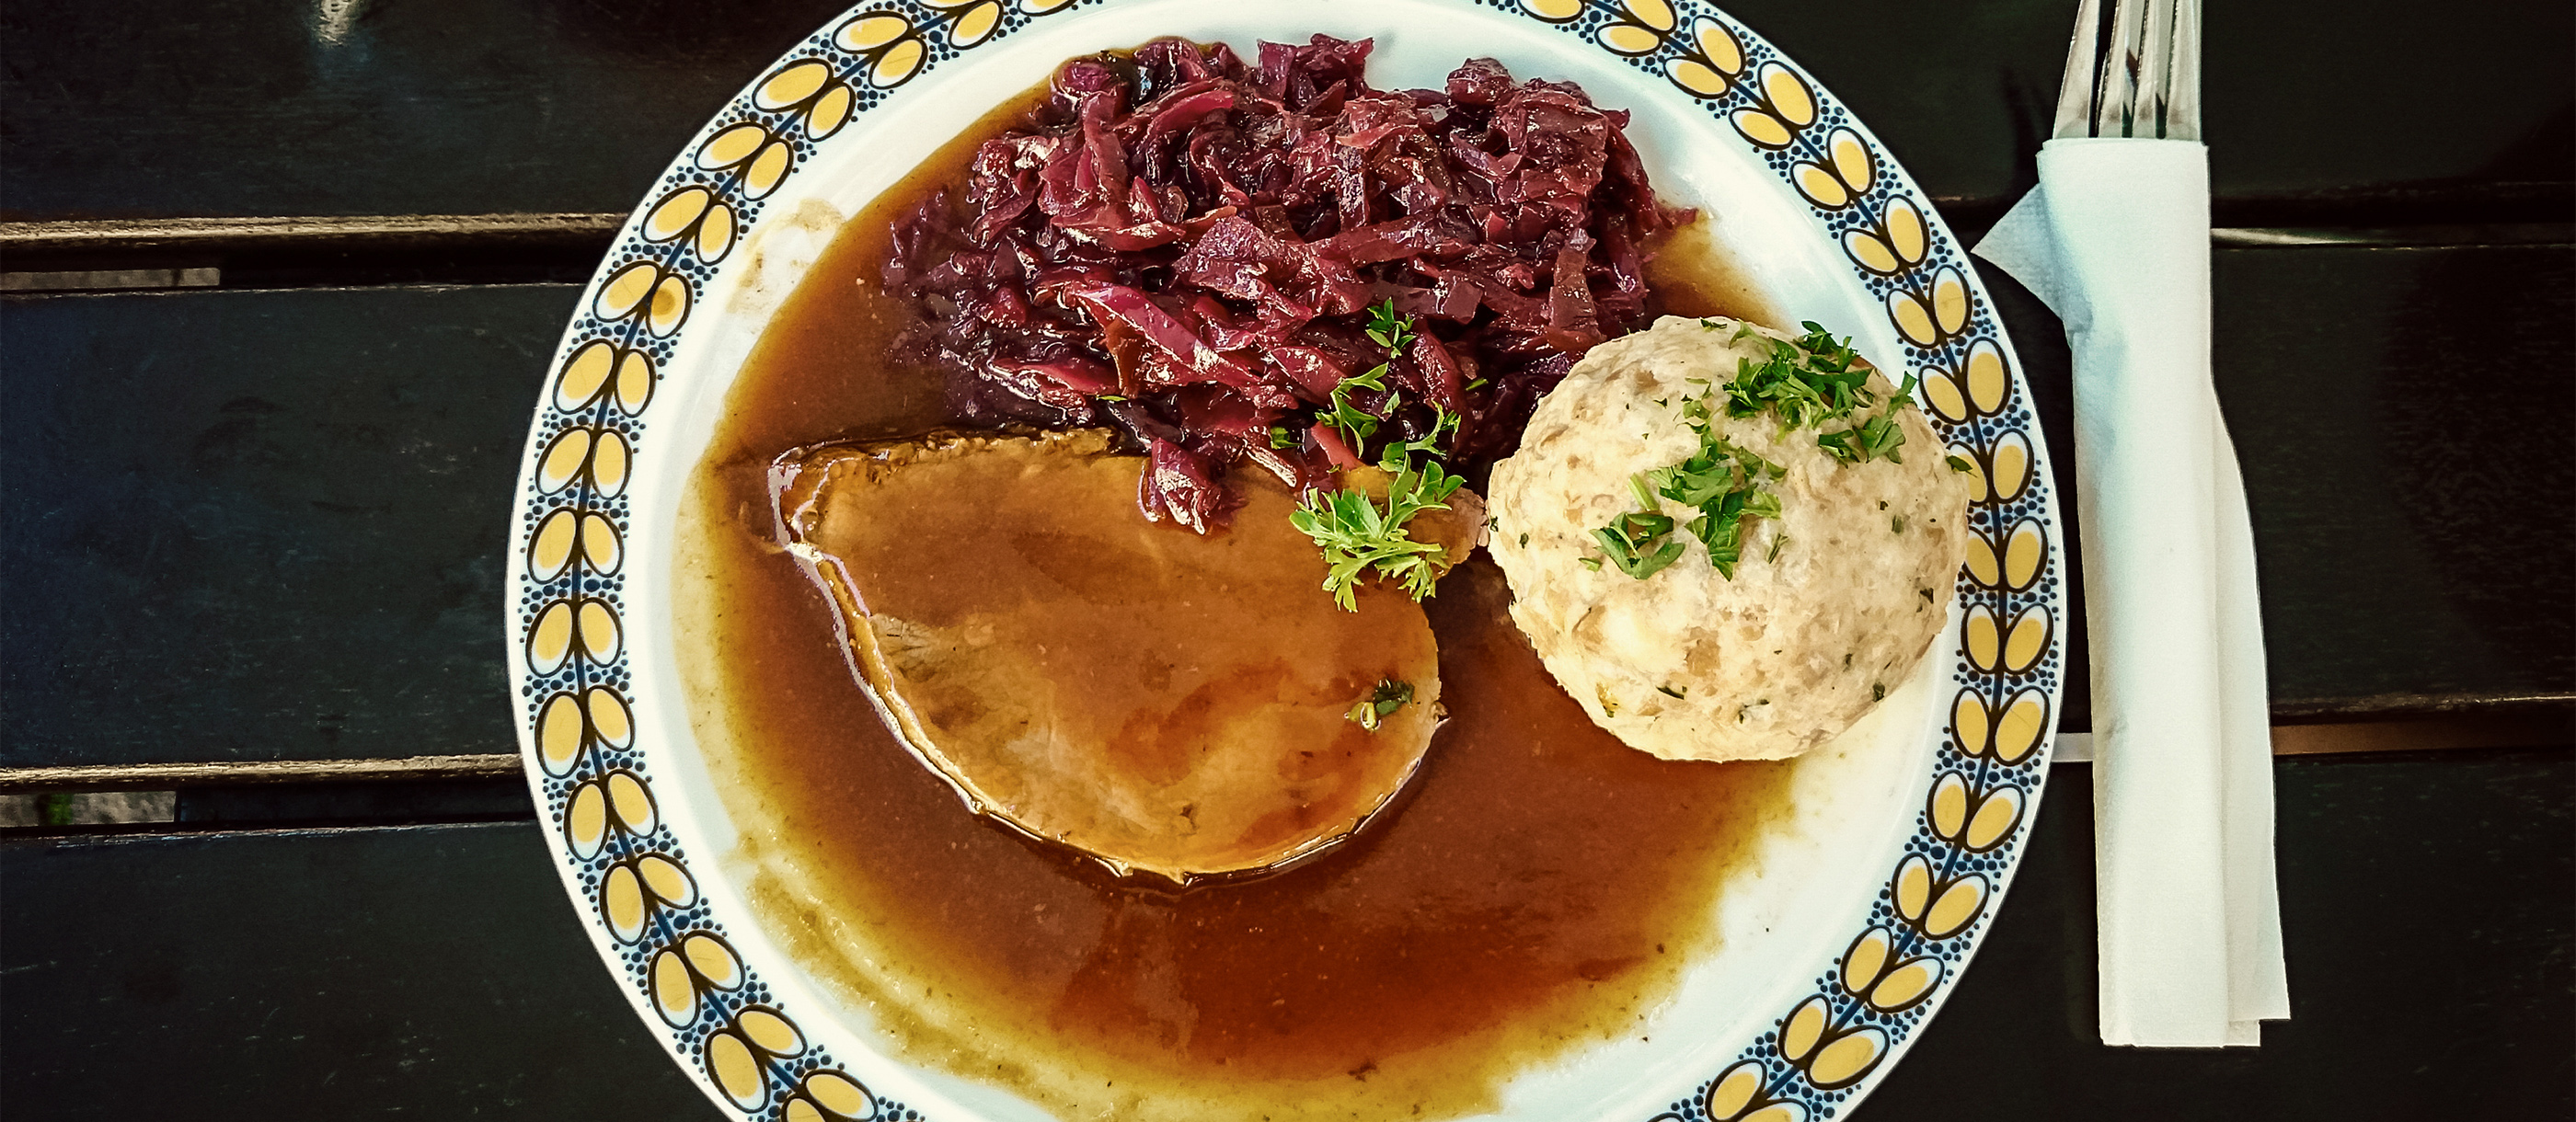 best meat for sauerbraten